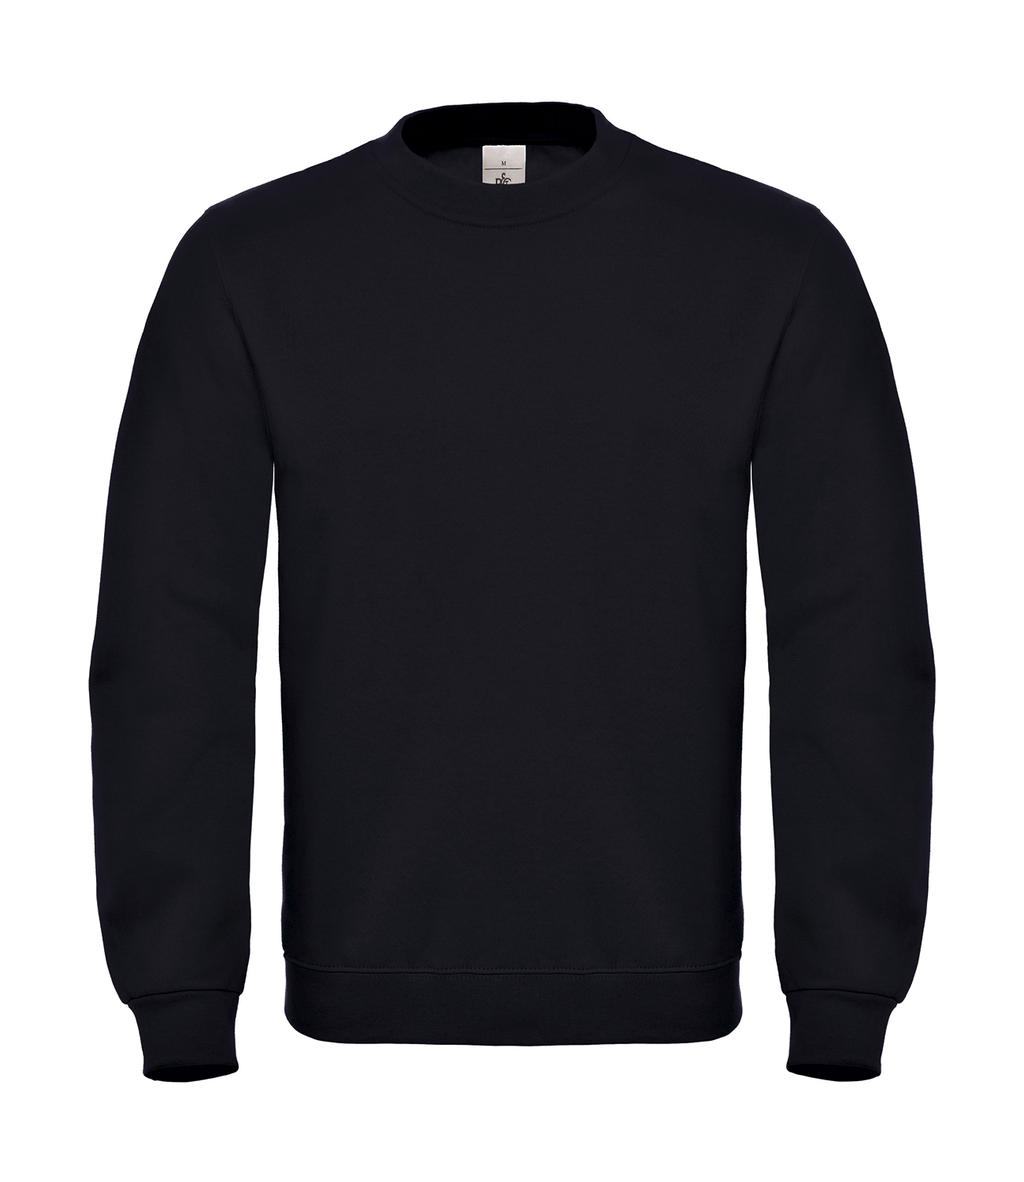  ID.002 Cotton Rich Sweatshirt  in Farbe Black